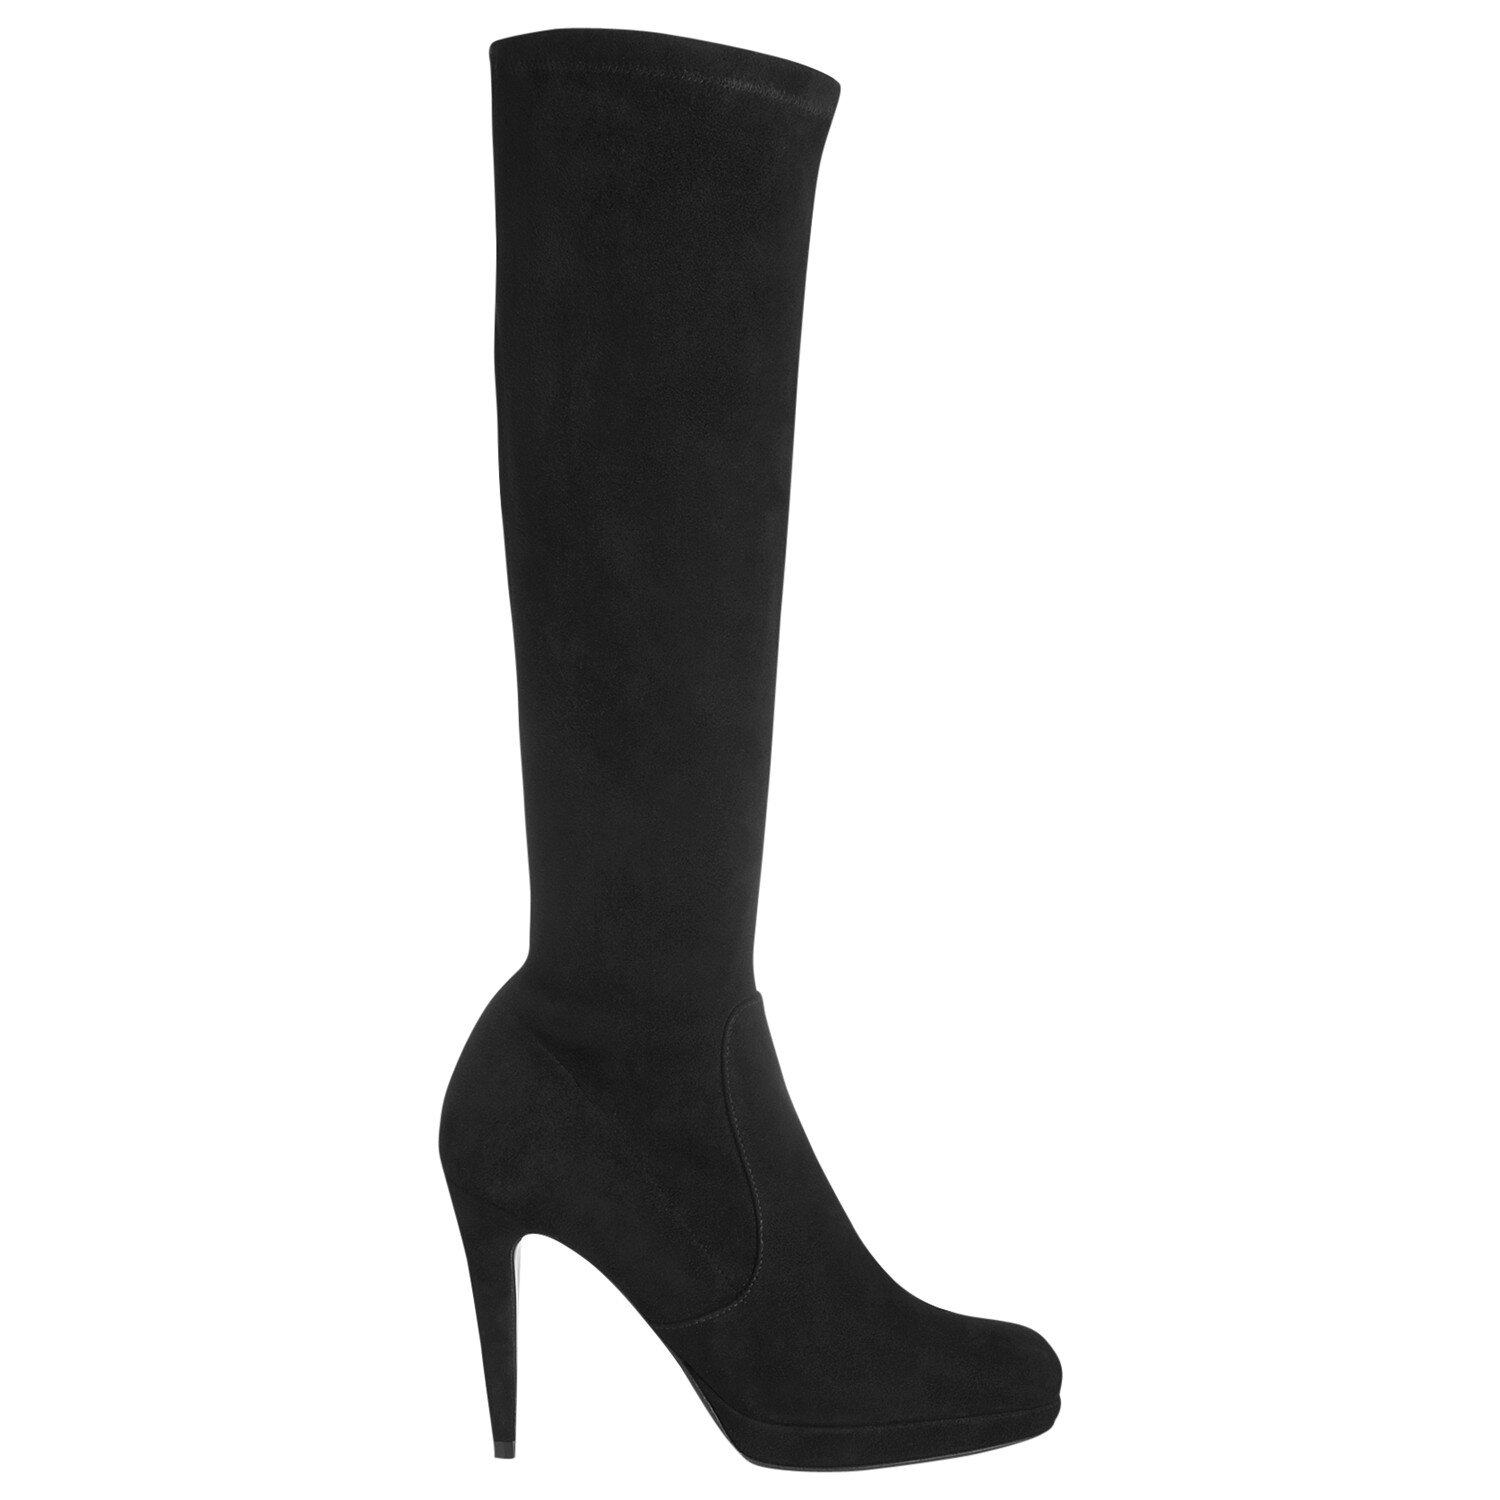 lk-bennett-black-belle-suede-knee-high-boots-product-1-13586507-354465014.jpg